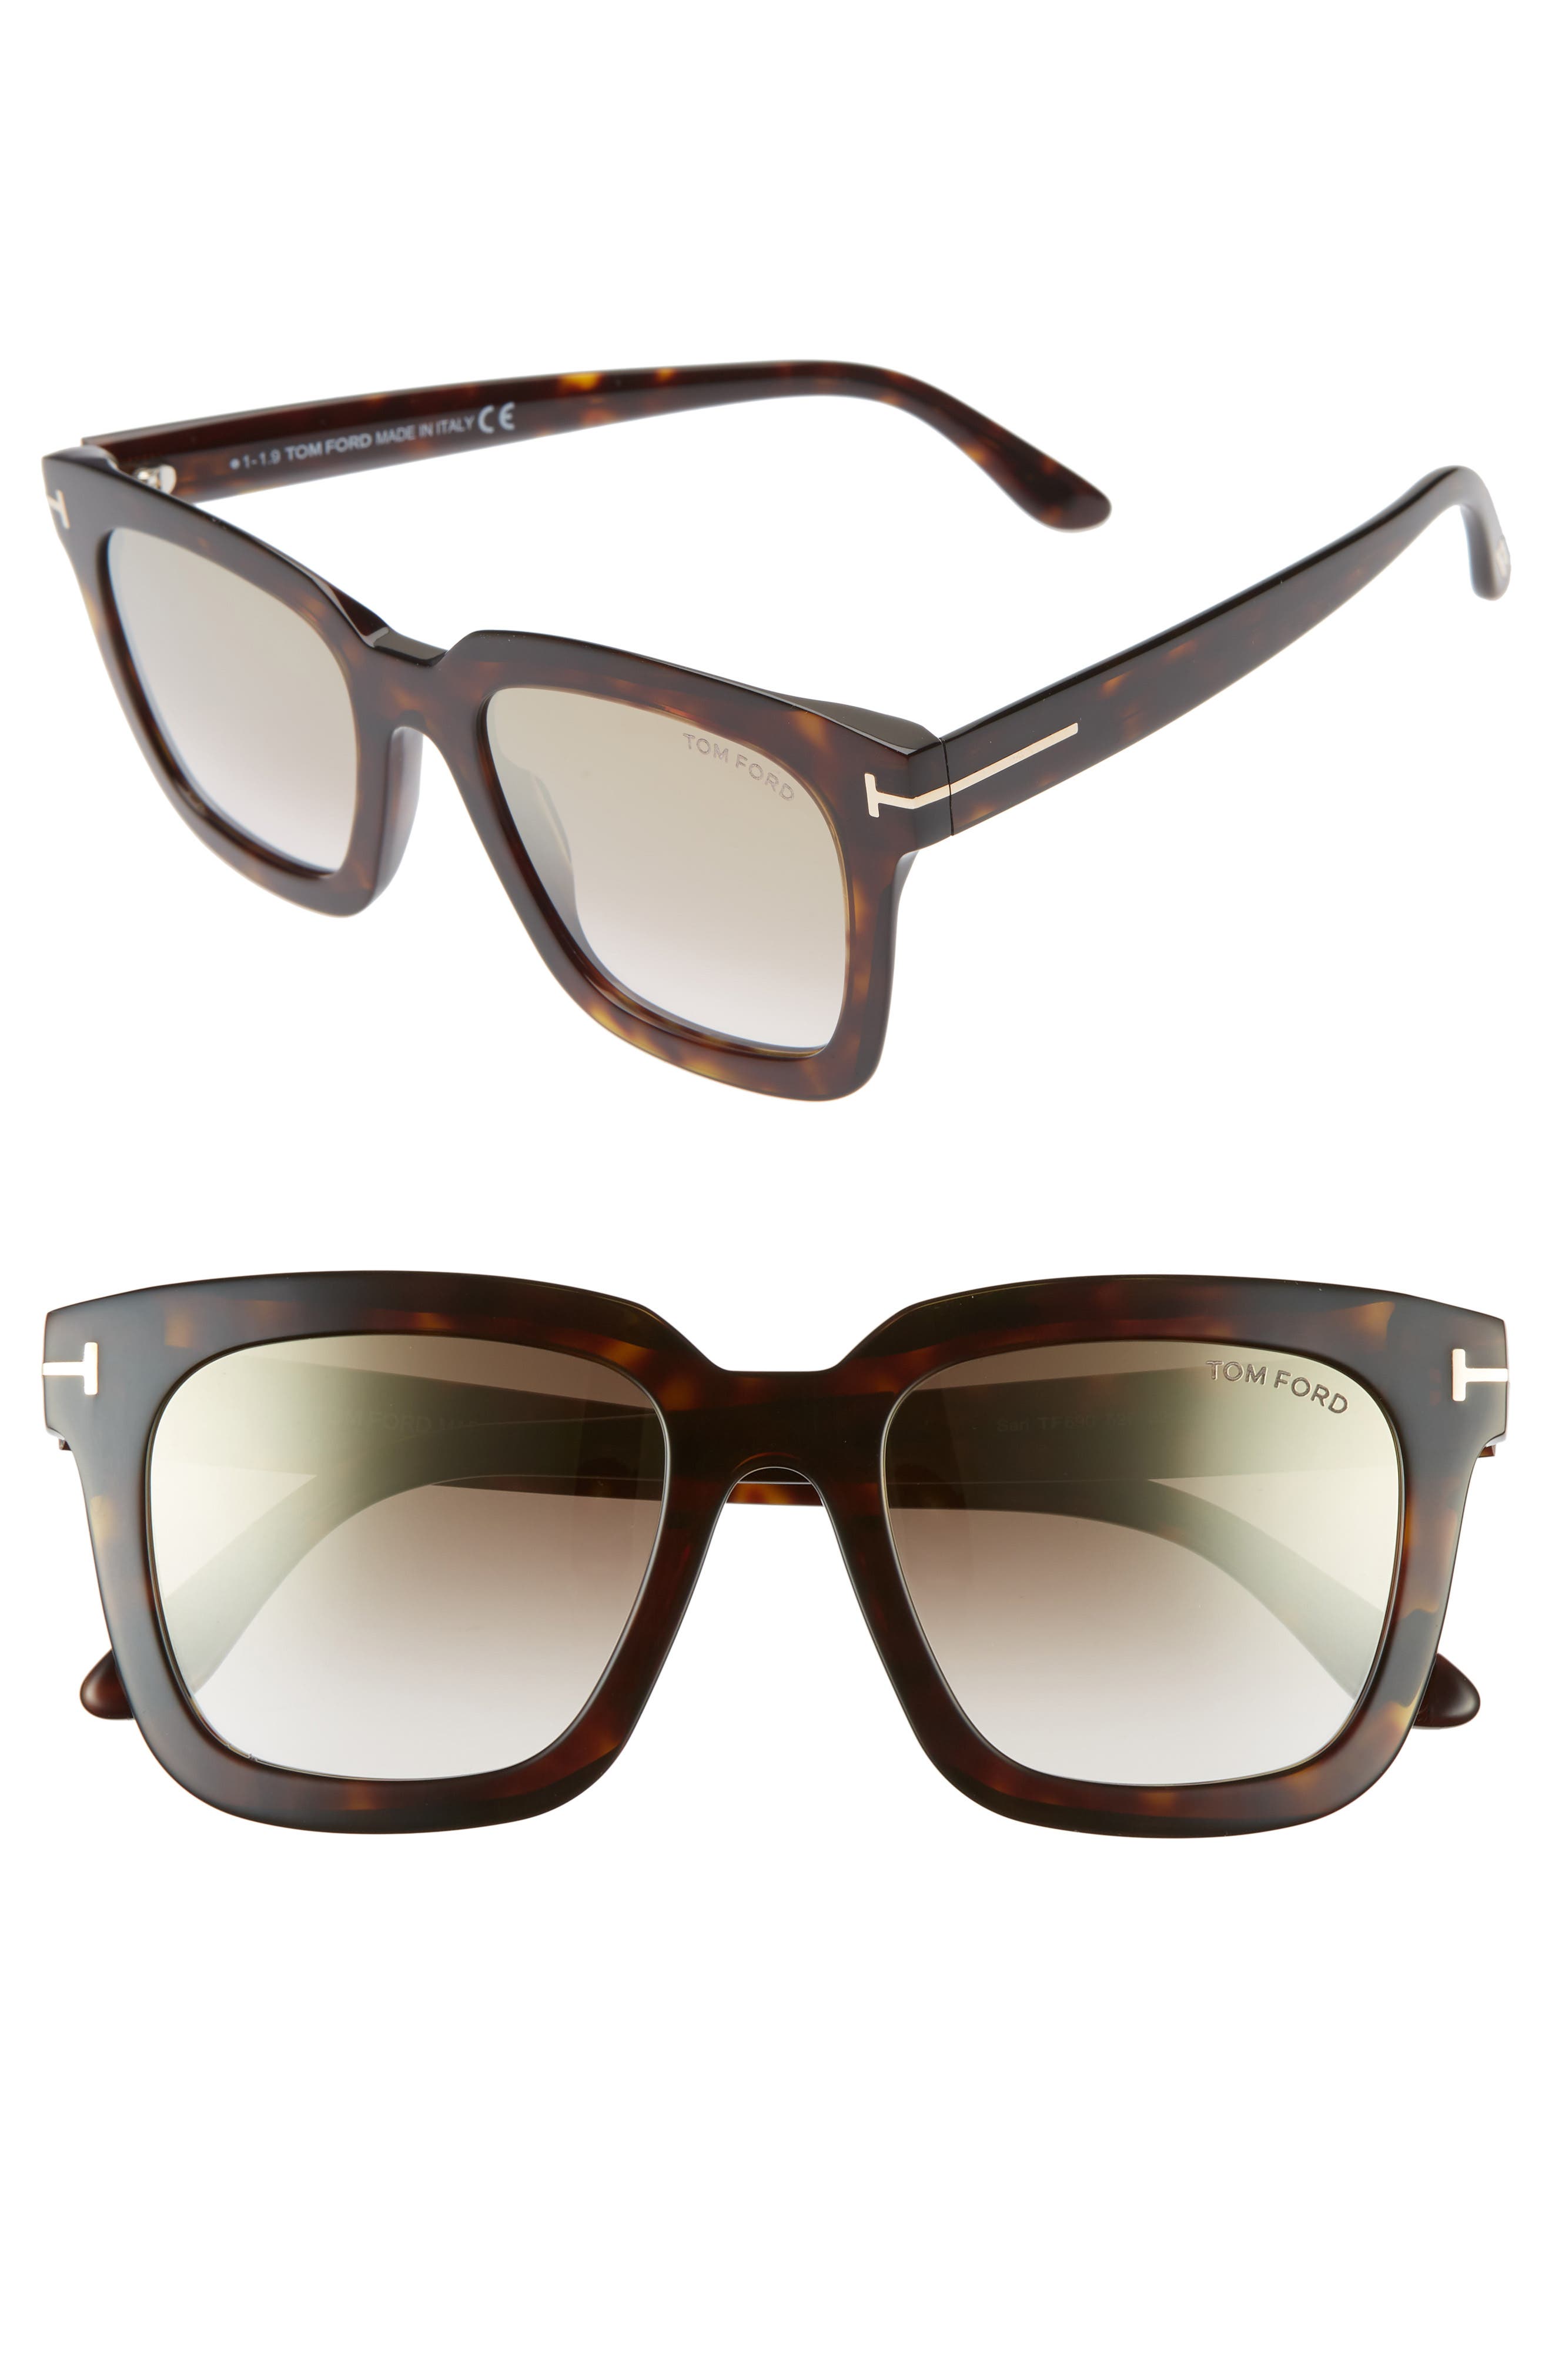 Tom Ford Sari 52mm Square Sunglasses in Dark Havana/Gradient Brown